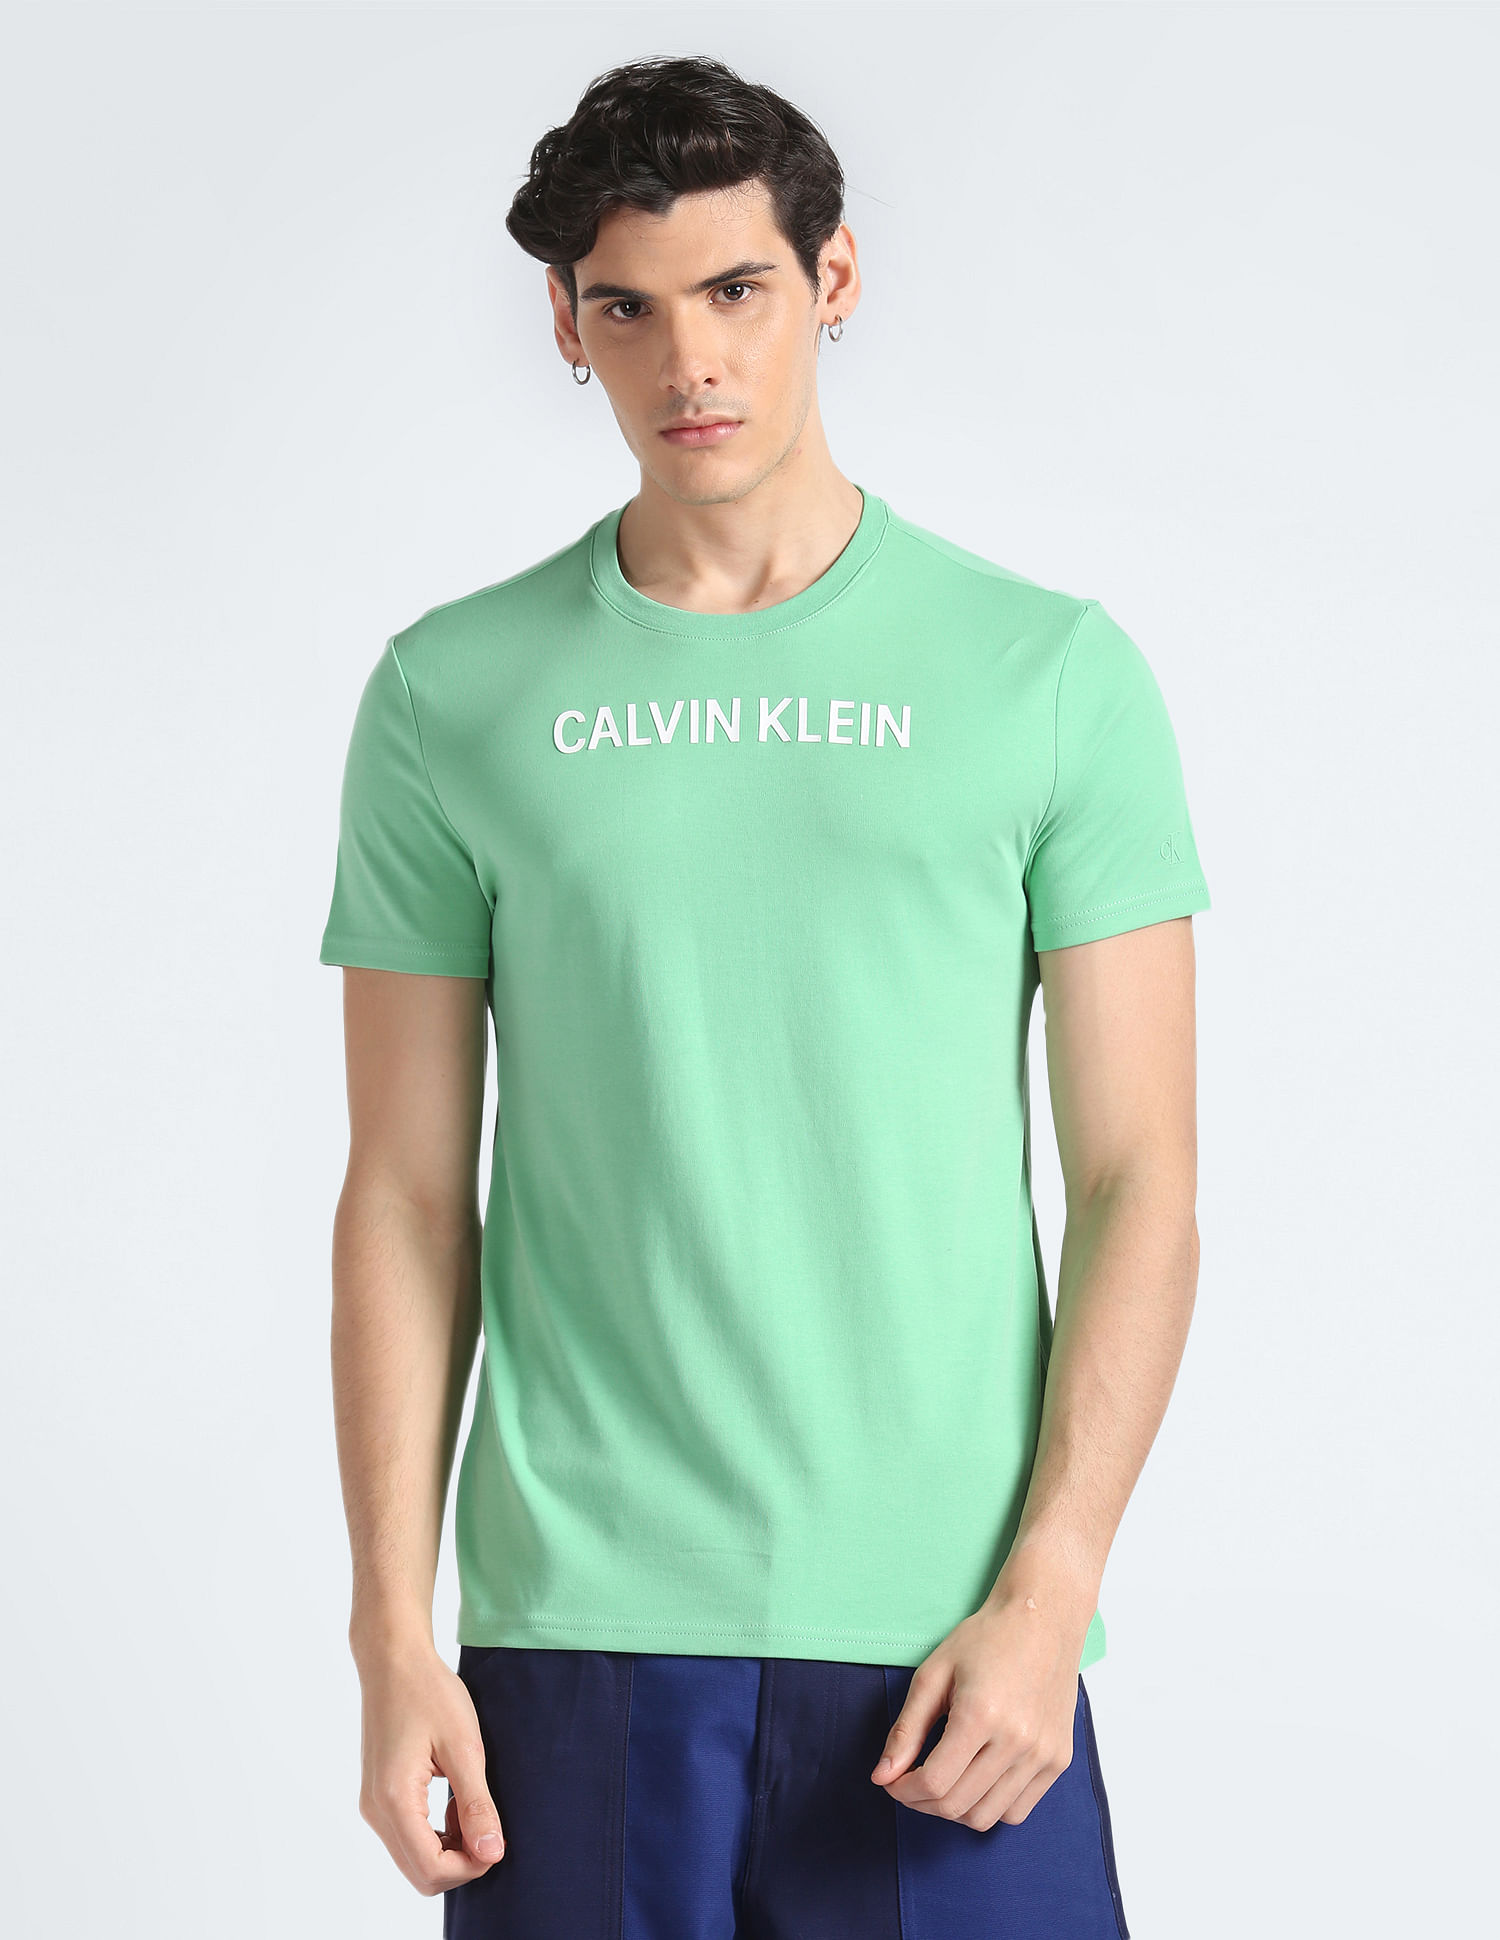 Micro Brand Buy T-Shirt Calvin Print Jeans Cotton Klein